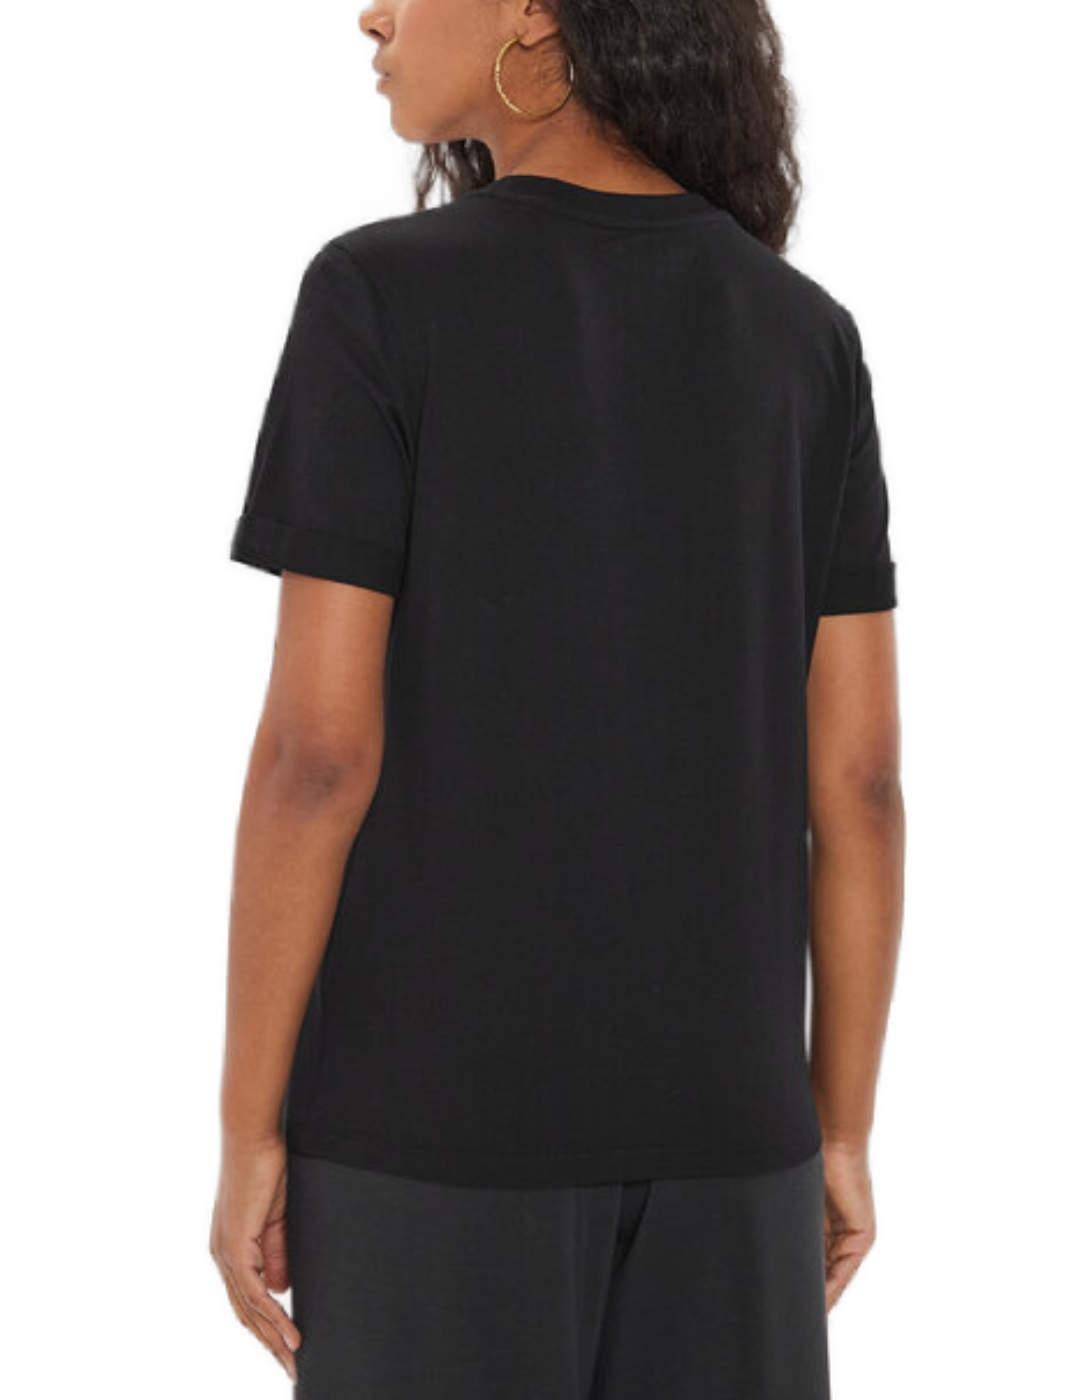 Camiseta Guess Glittery negro manga corta para mujer